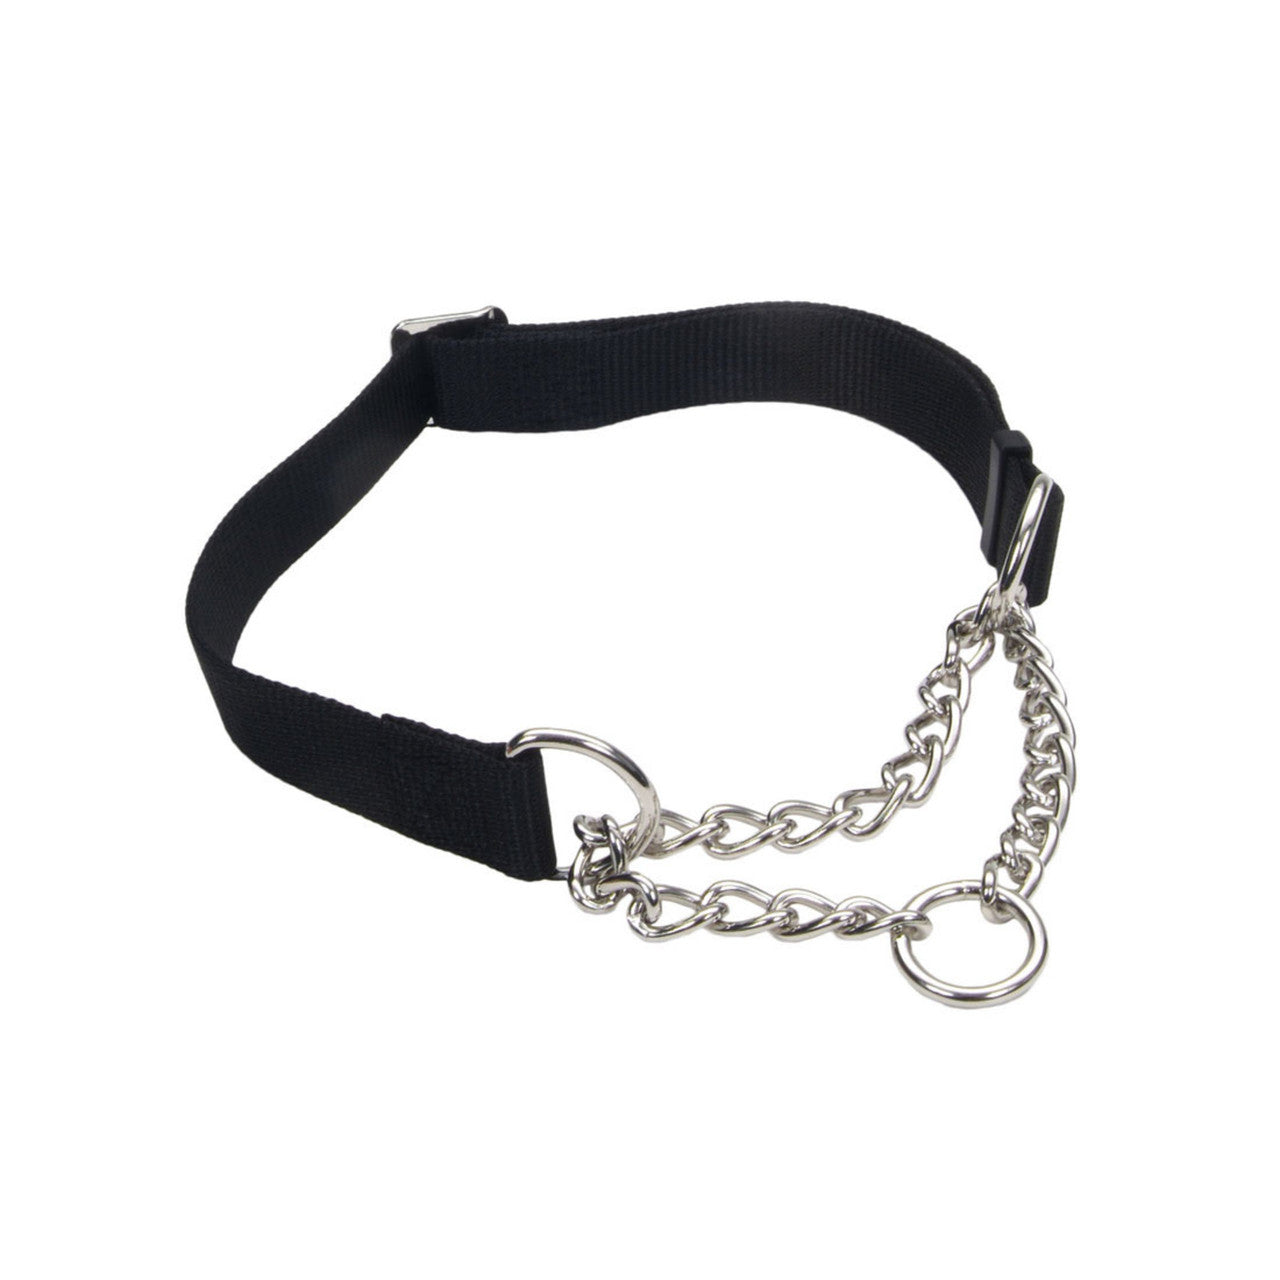 Check-Choke Adjustable Check Training Dog Collar Black 3/4 in x 14-20 in